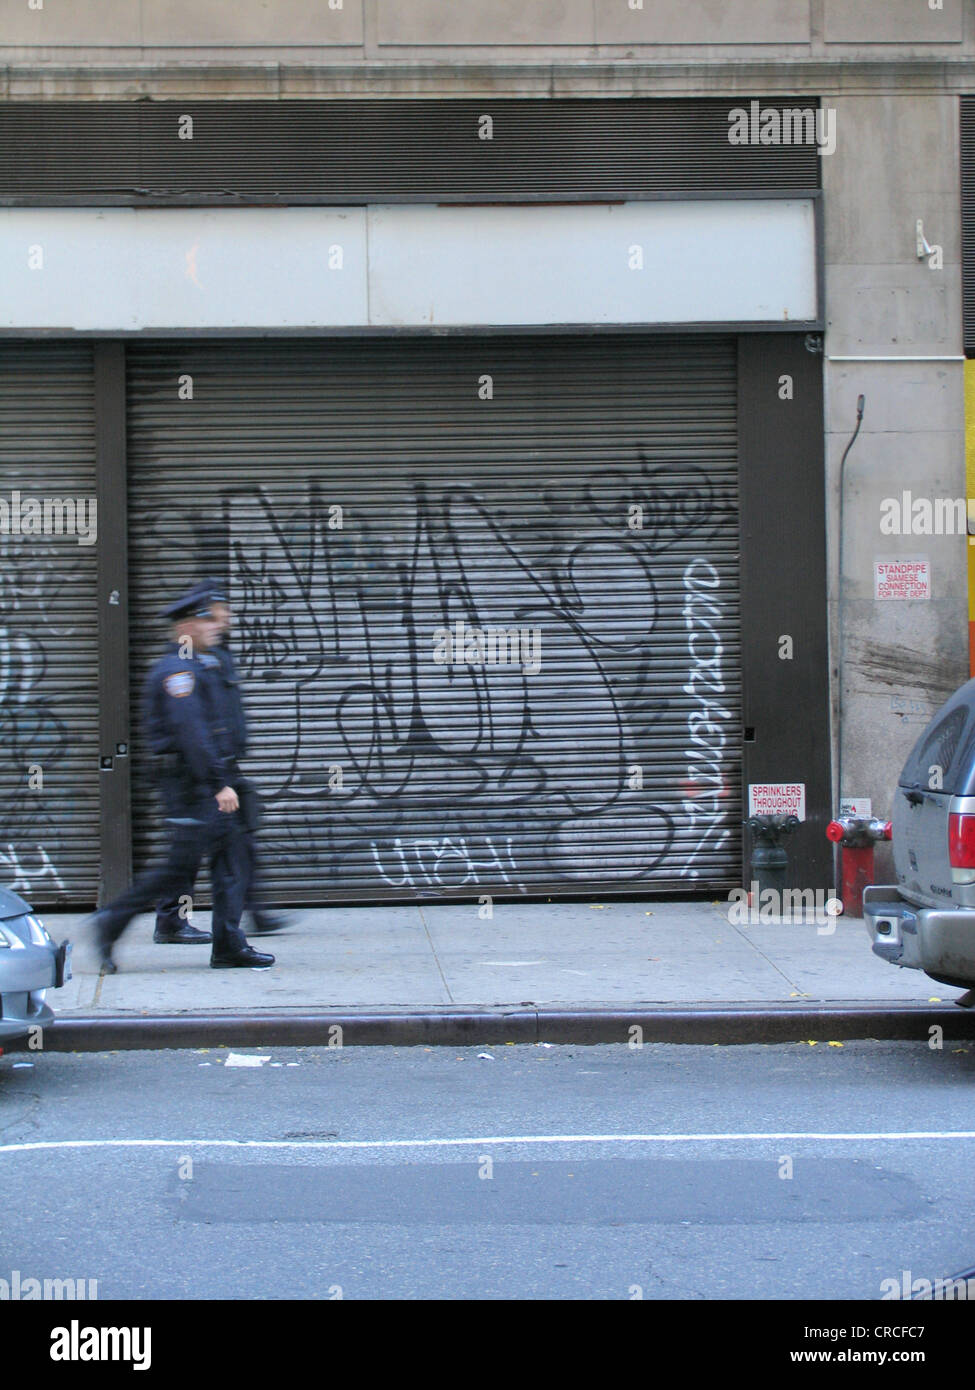 policemen walking in front of metal shutters with graffiti, USA, Manhattan, New York Stock Photo